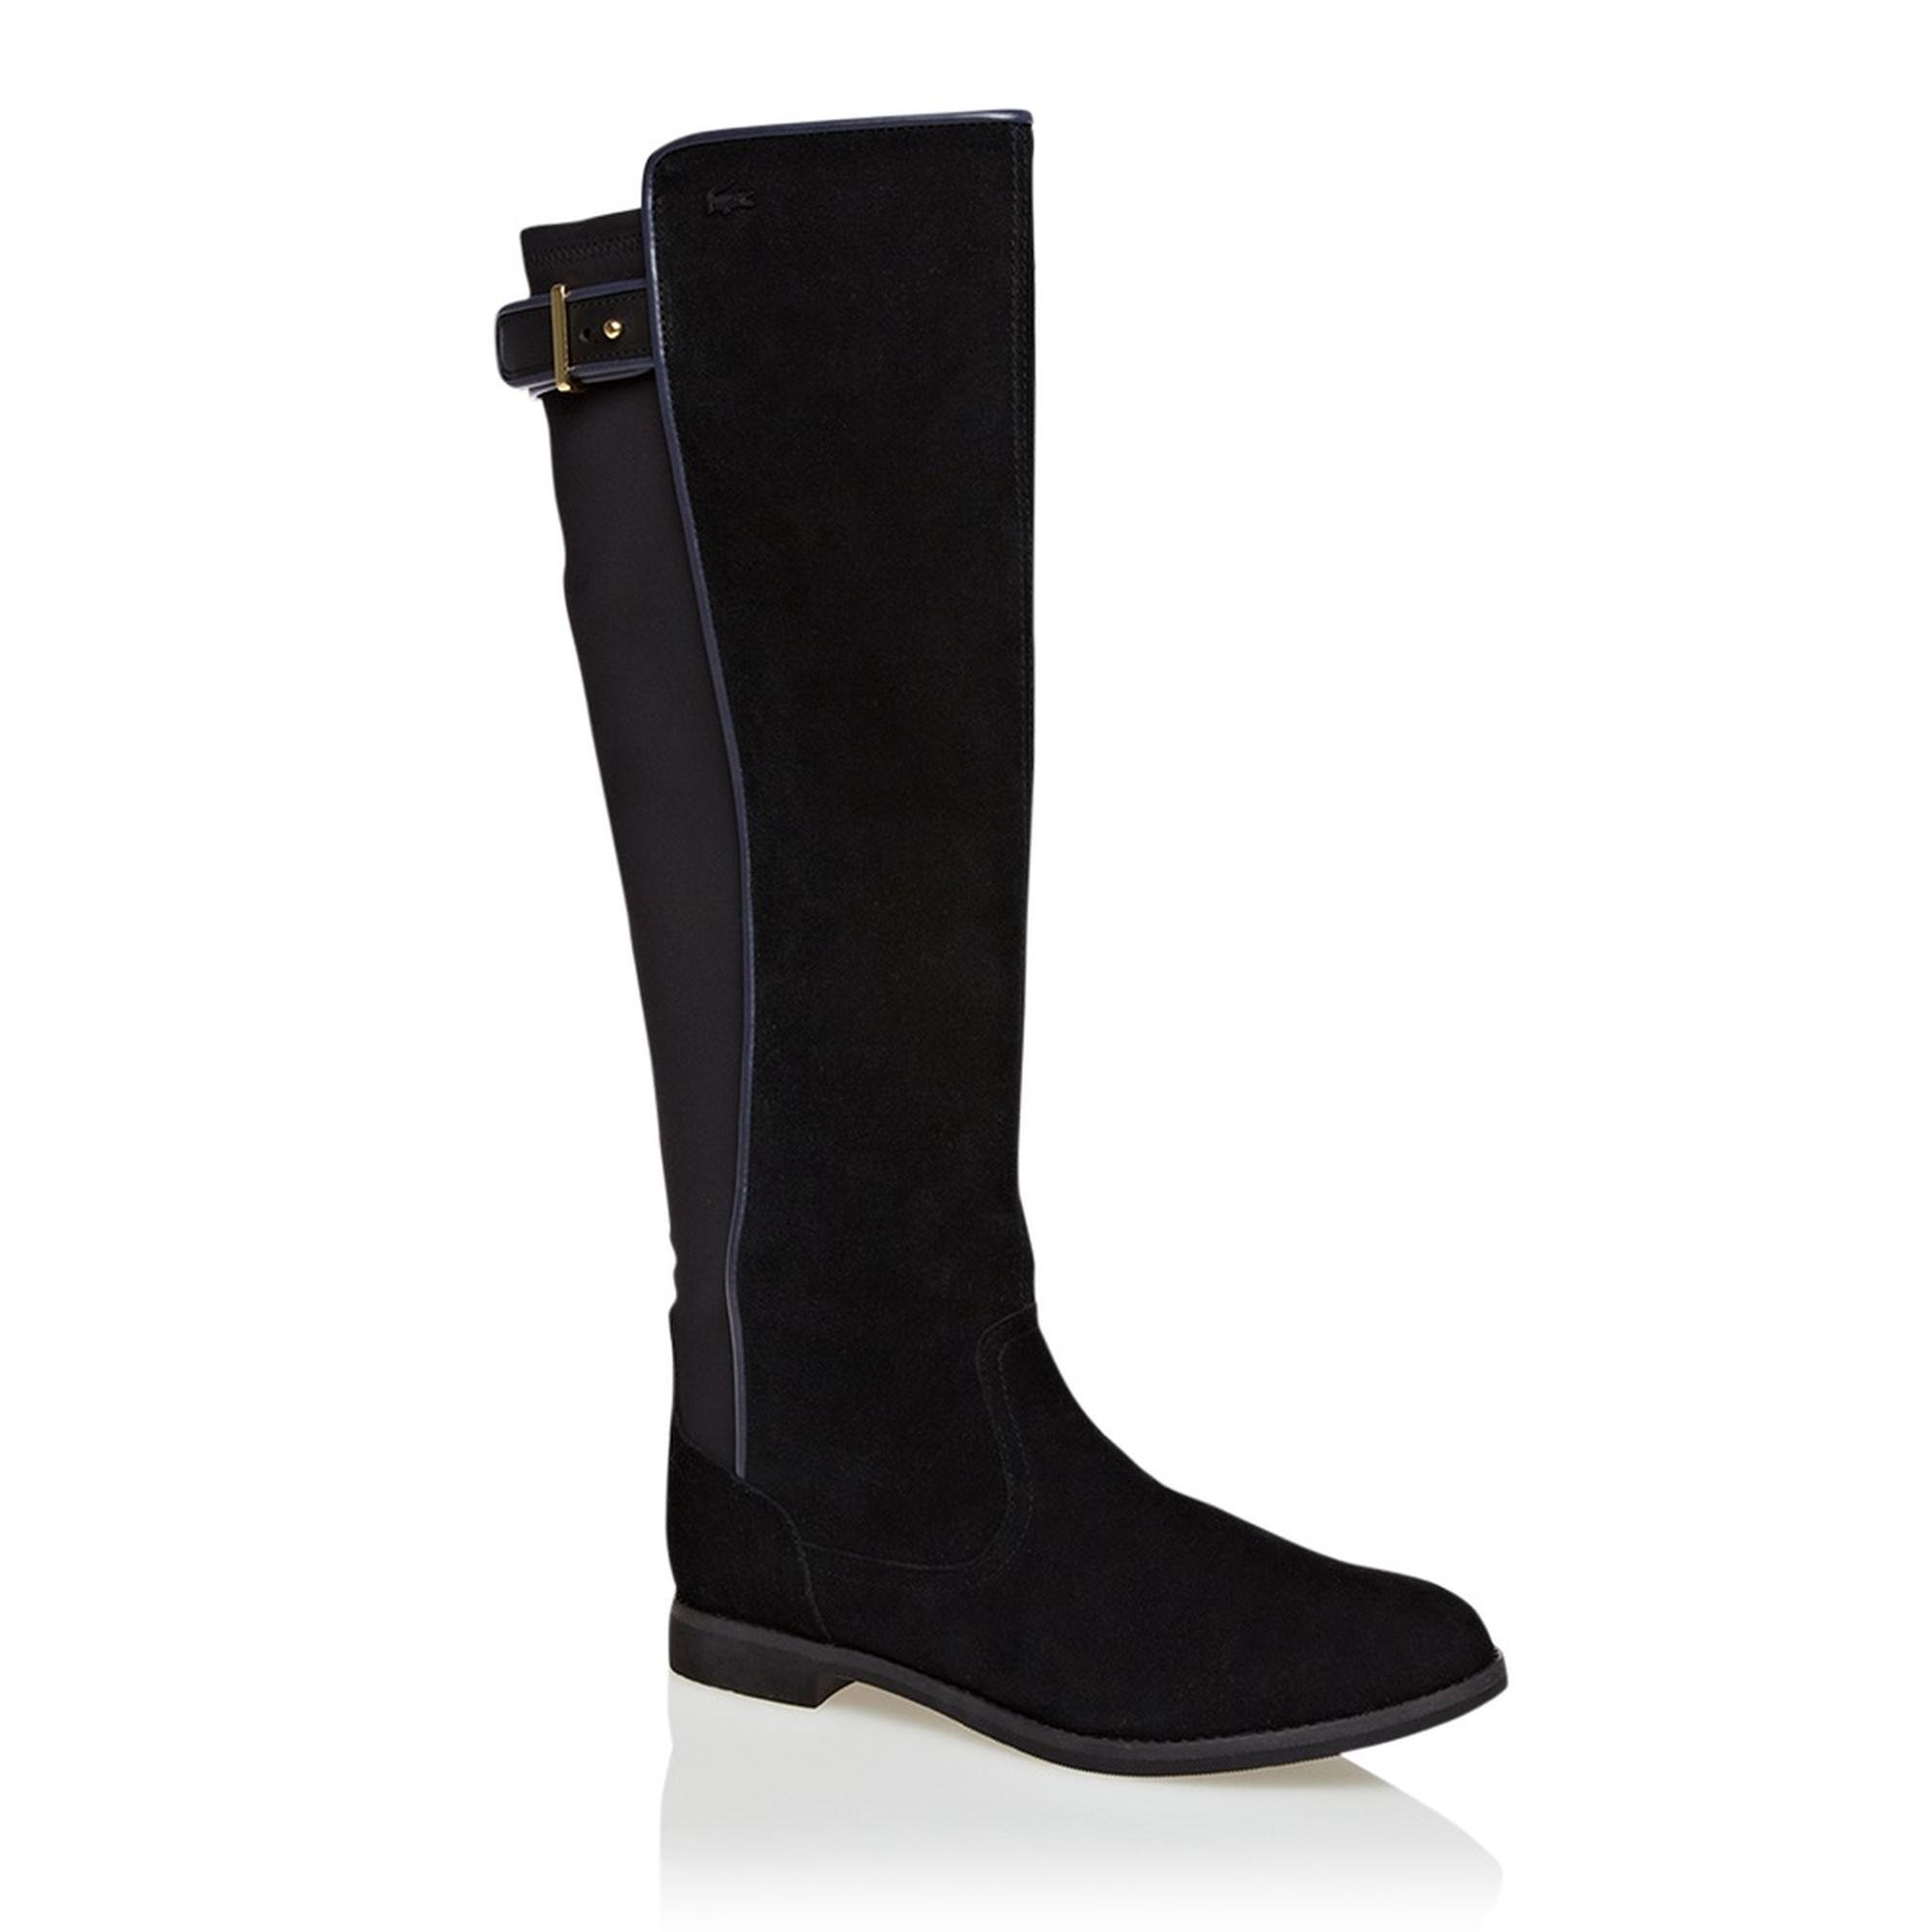 Lacoste Women's Boots